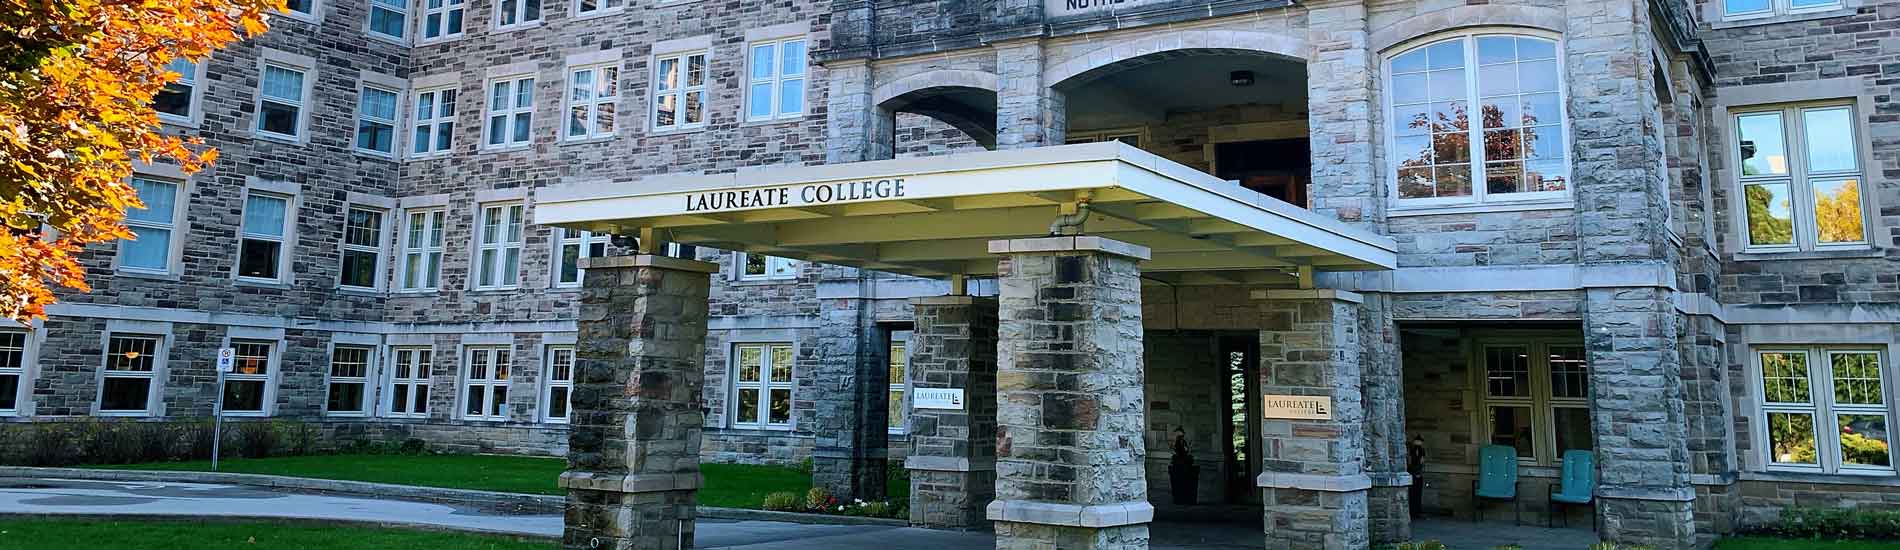 Laureate College entrance